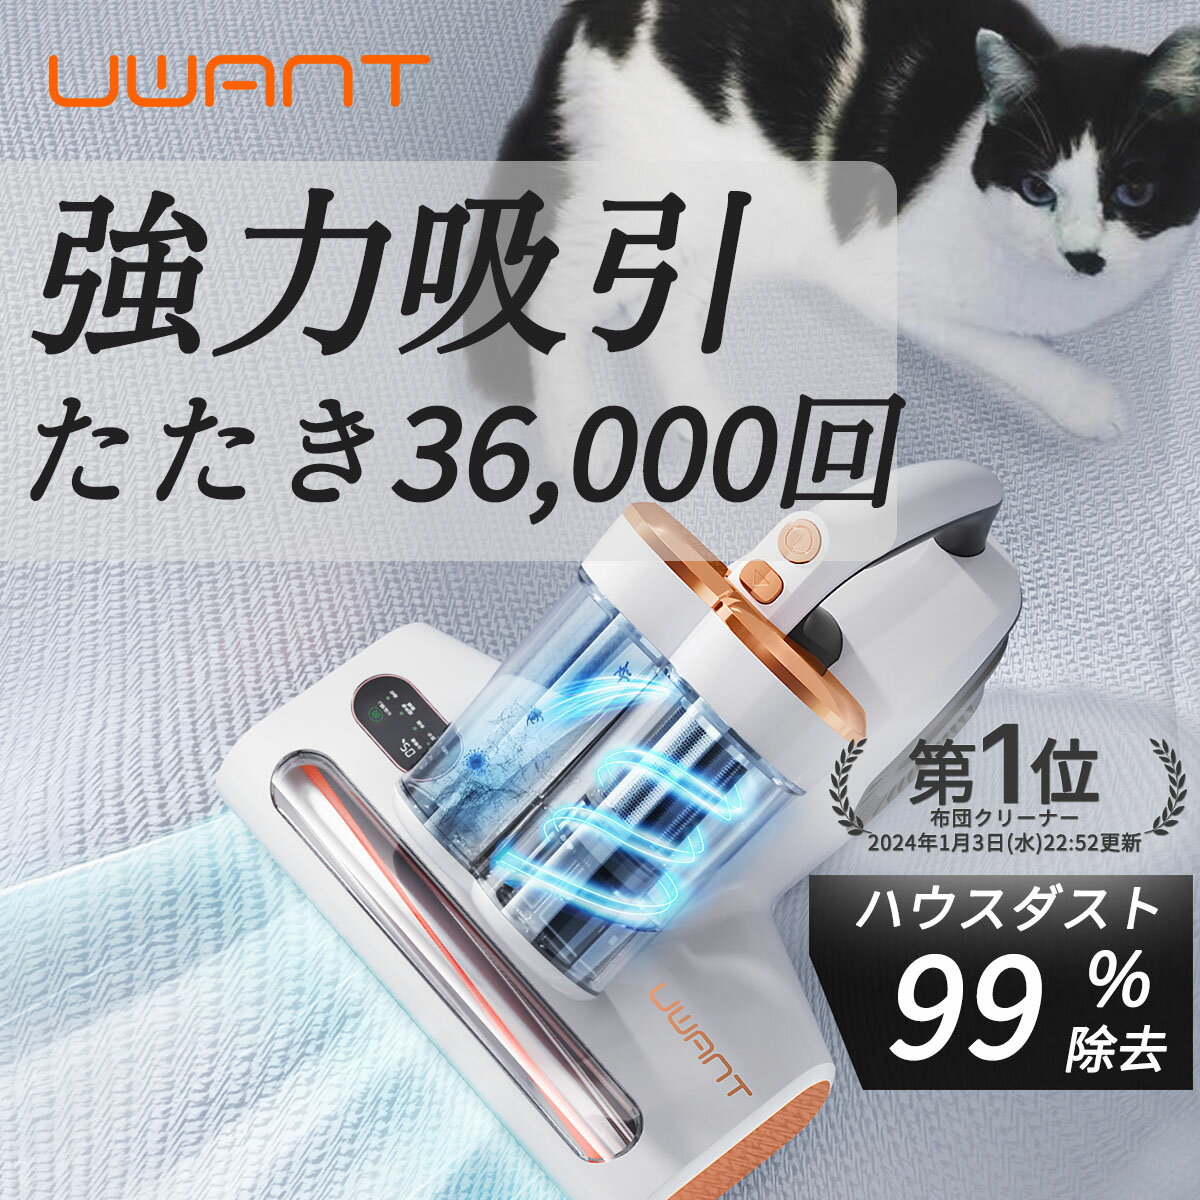 SALE特典+1,000円クーポン【 UWANT 公式